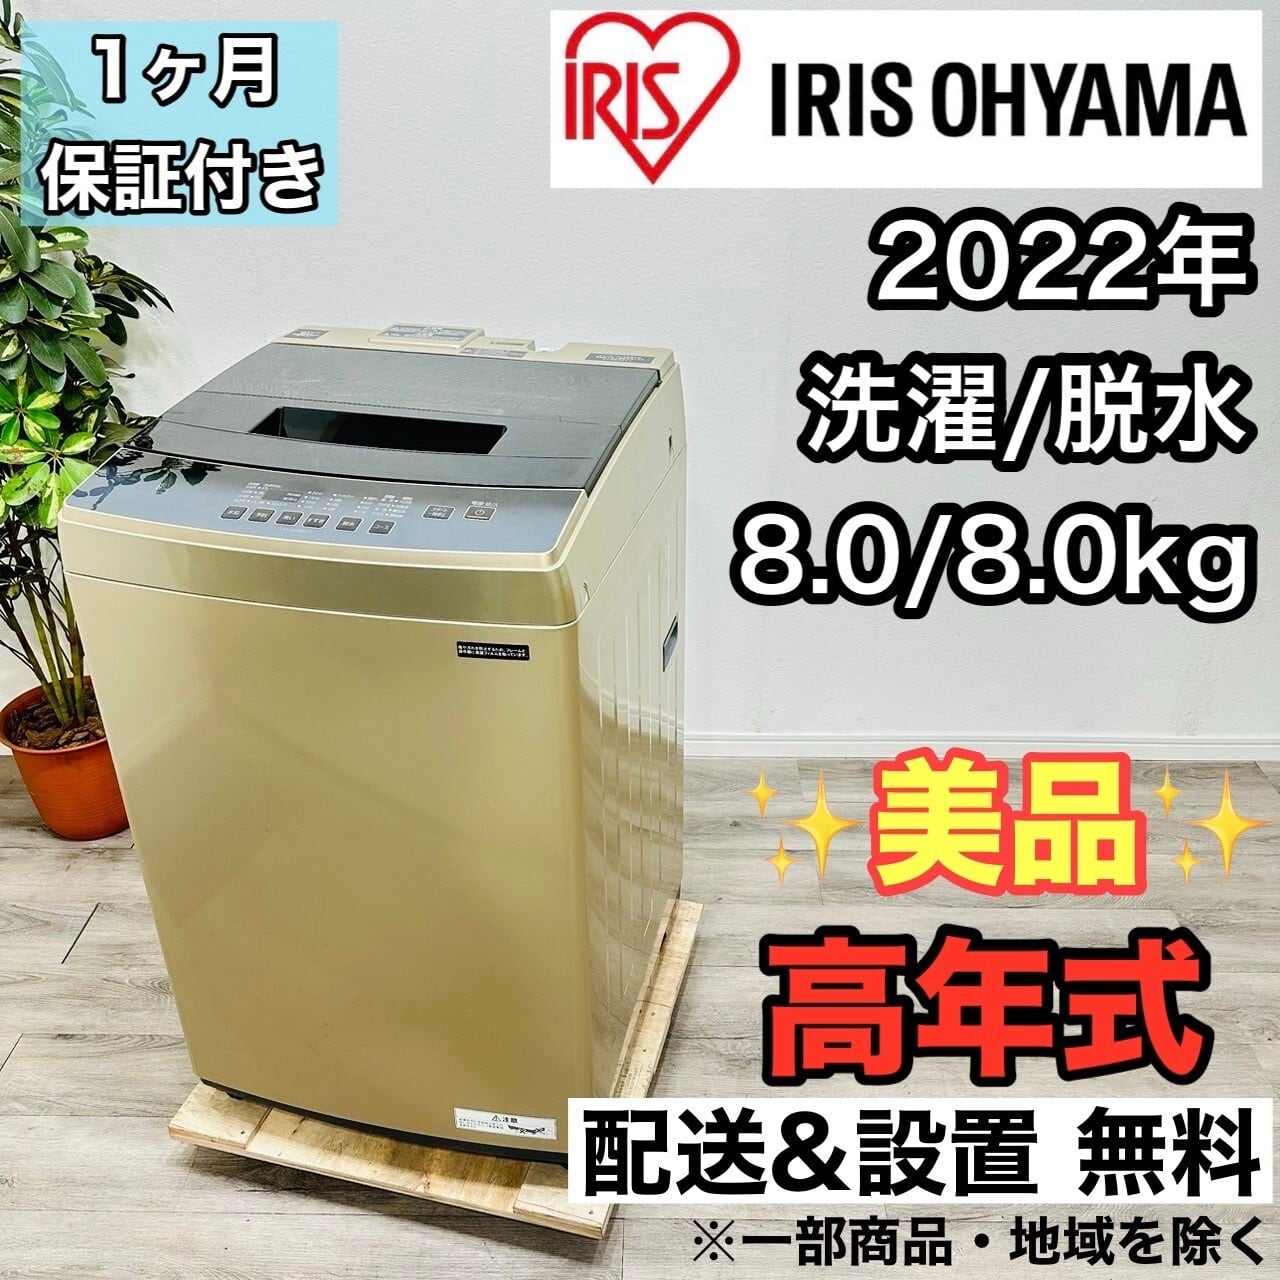 ♦️TOSHIBA a1798 洗濯機 8.0kg 2018年製 7♦️ | ネットでリサイクル ...